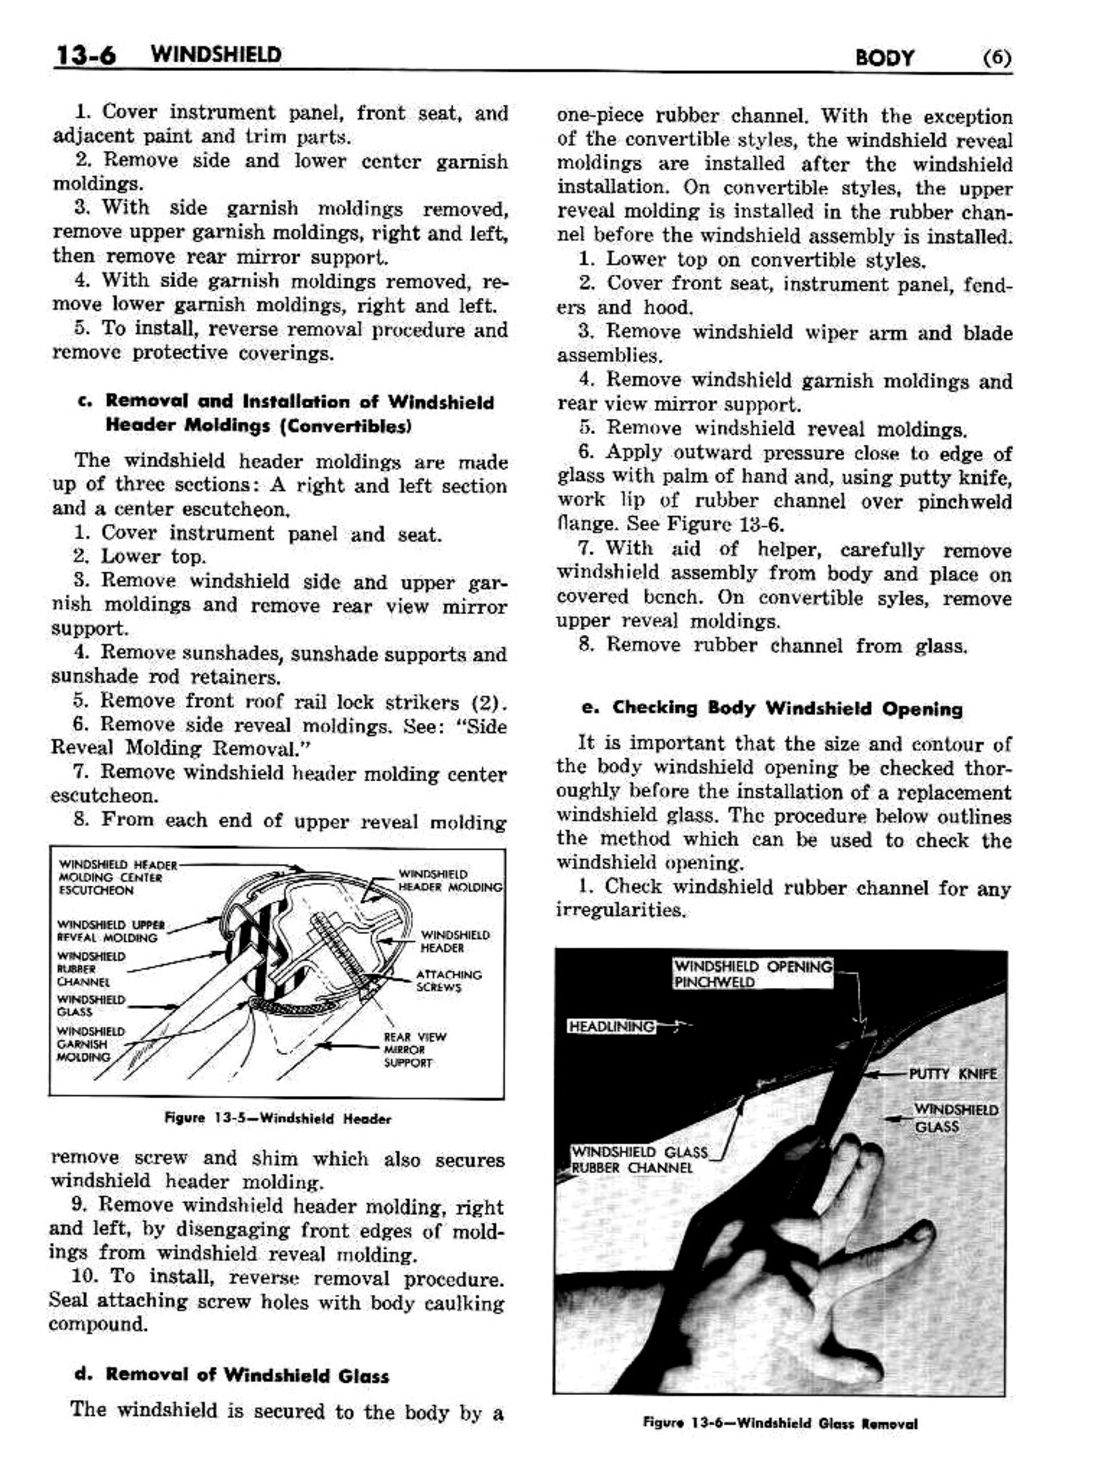 n_1958 Buick Body Service Manual-007-007.jpg